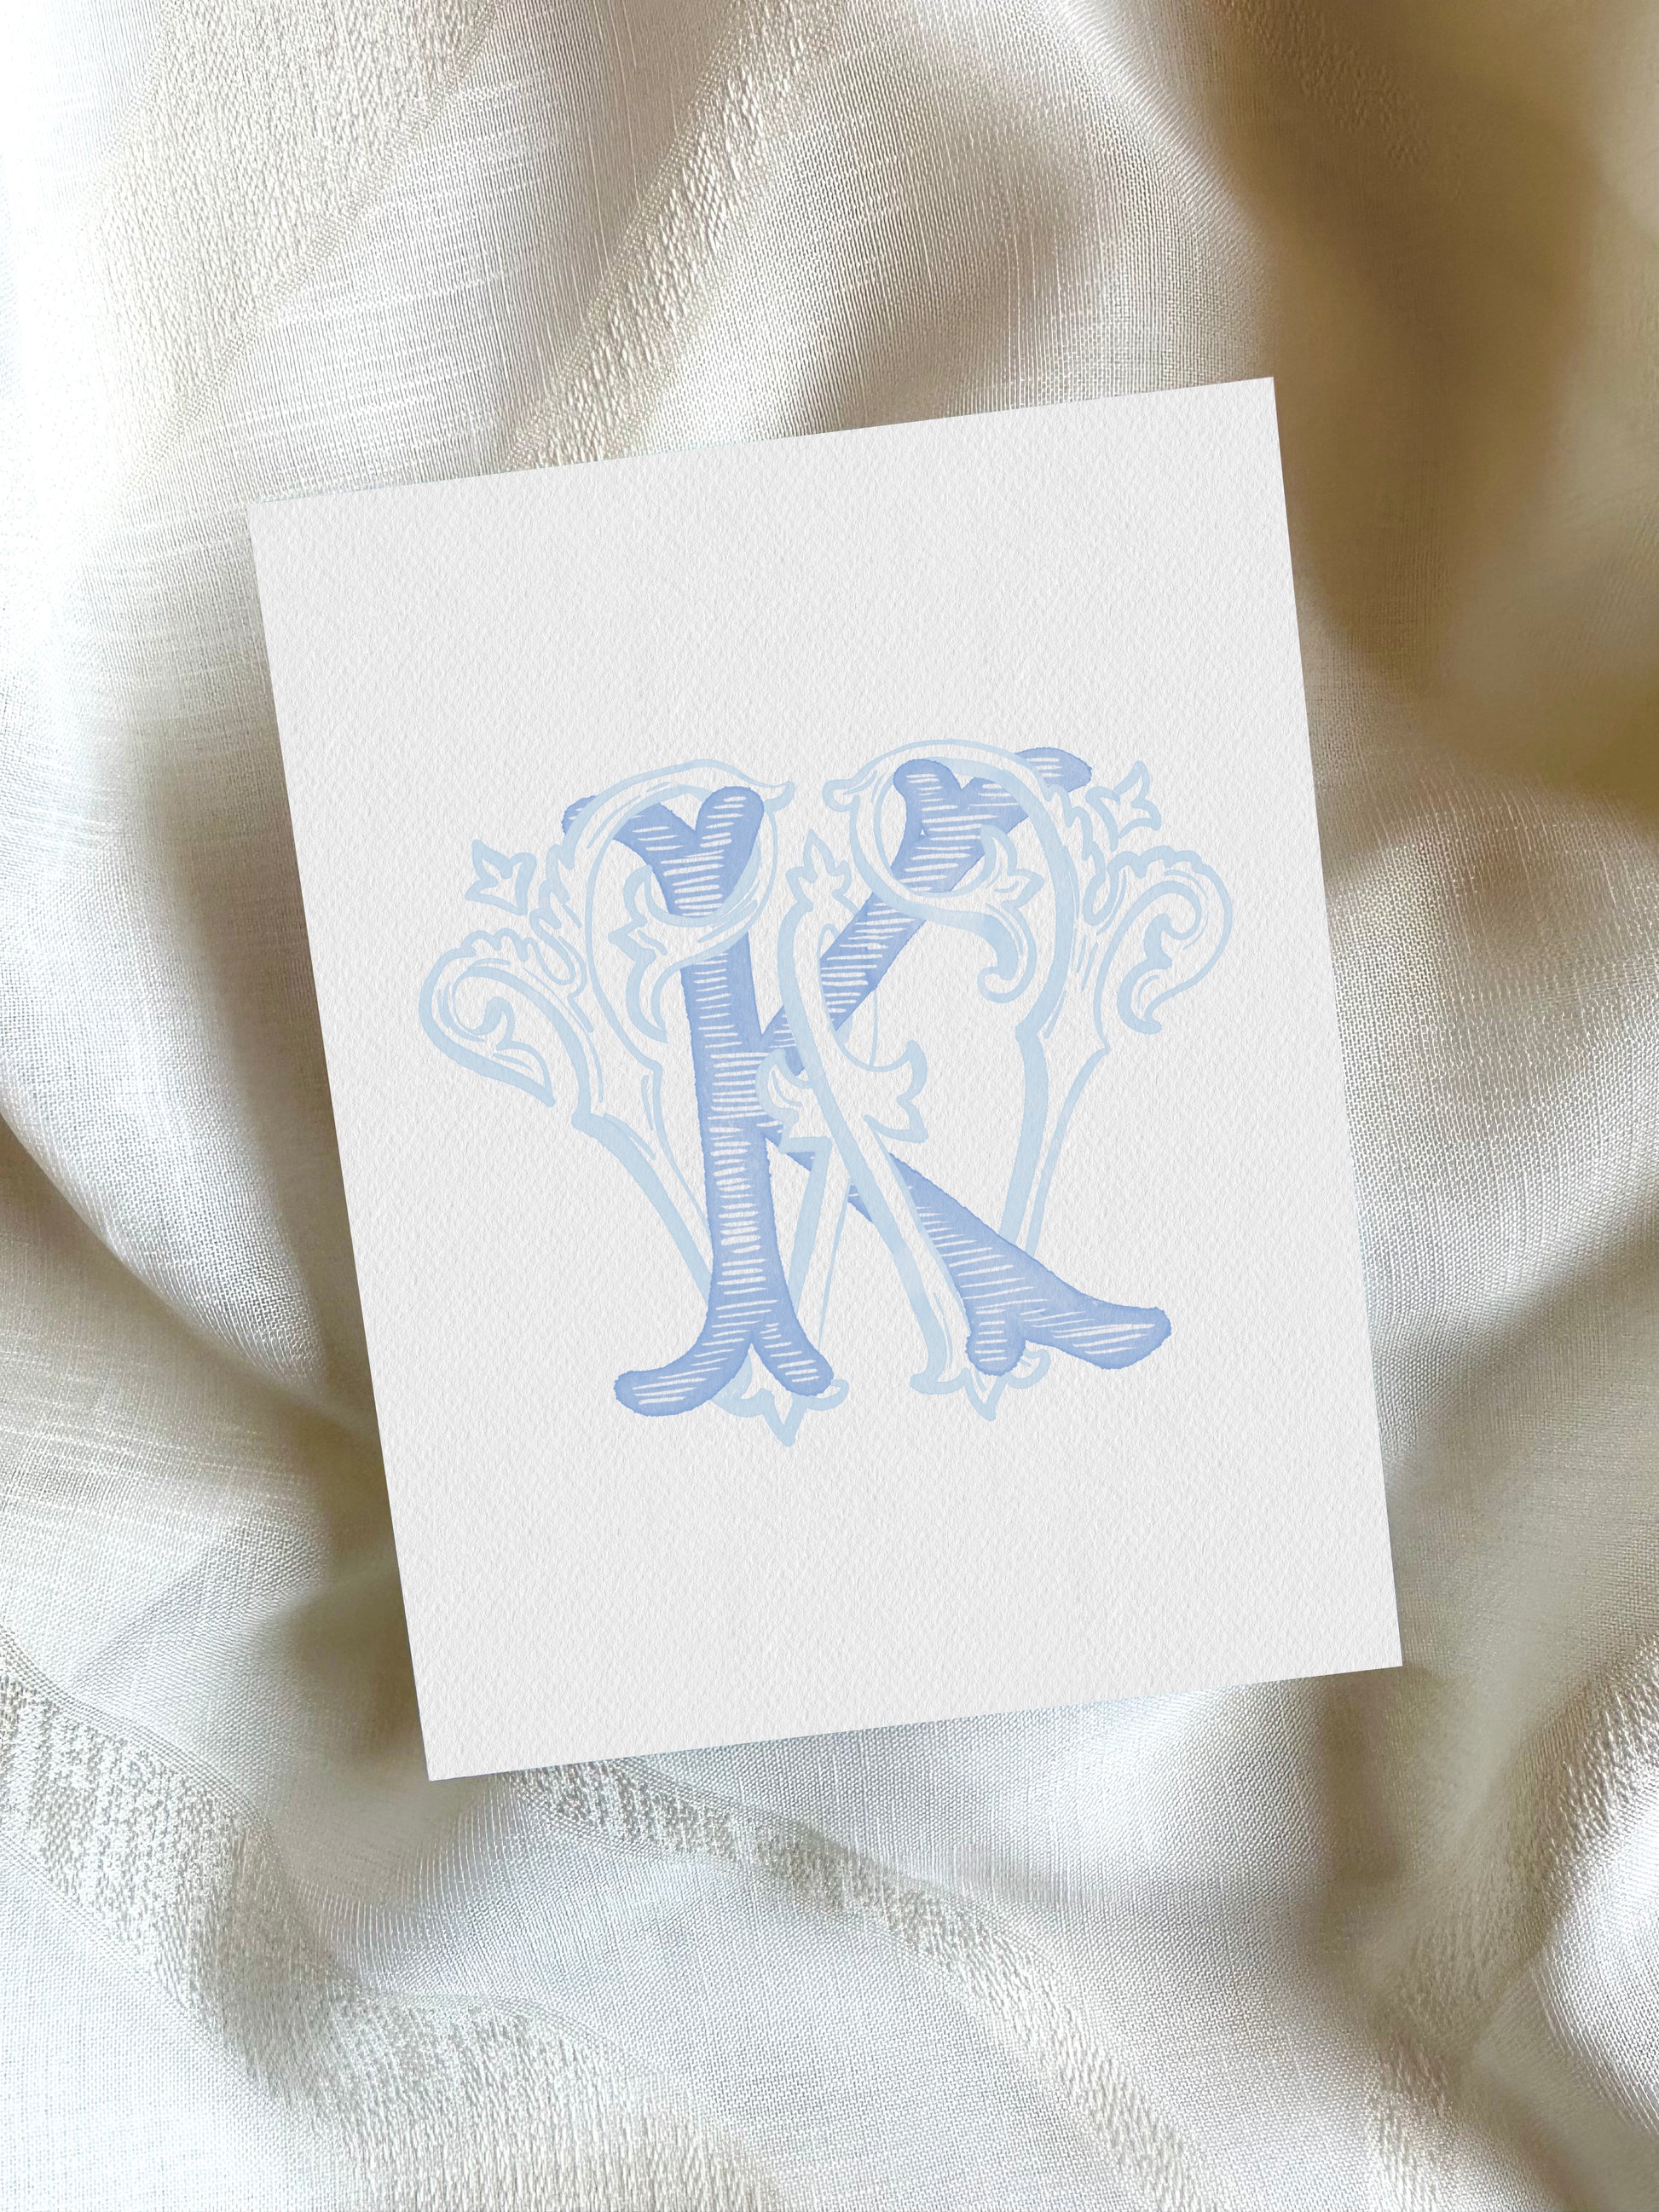 2 Letter Monogram with Letters KW WK | Digital Download - Wedding Monogram SVG, Personal Logo, Wedding Logo for Wedding Invitations The Wedding Crest Lab